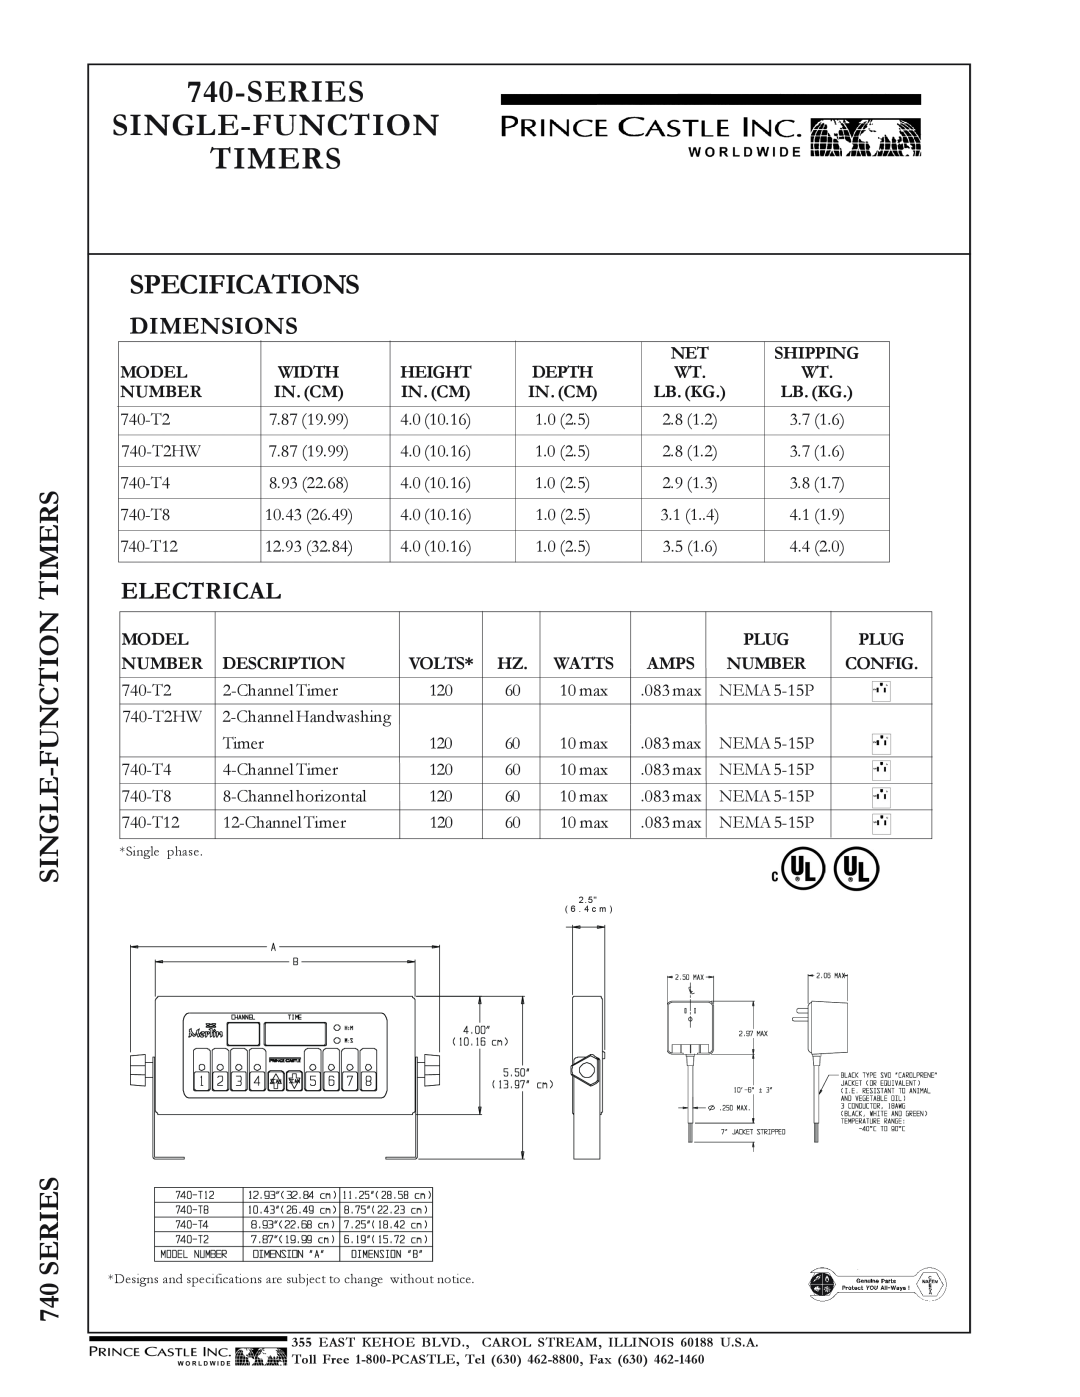 Prince Castle 740-T2, 740-T8 Series Single-Function Timers, SINGLE-FUNCTIONTIMERS 740 SERIES, Specifications, Dimensions 